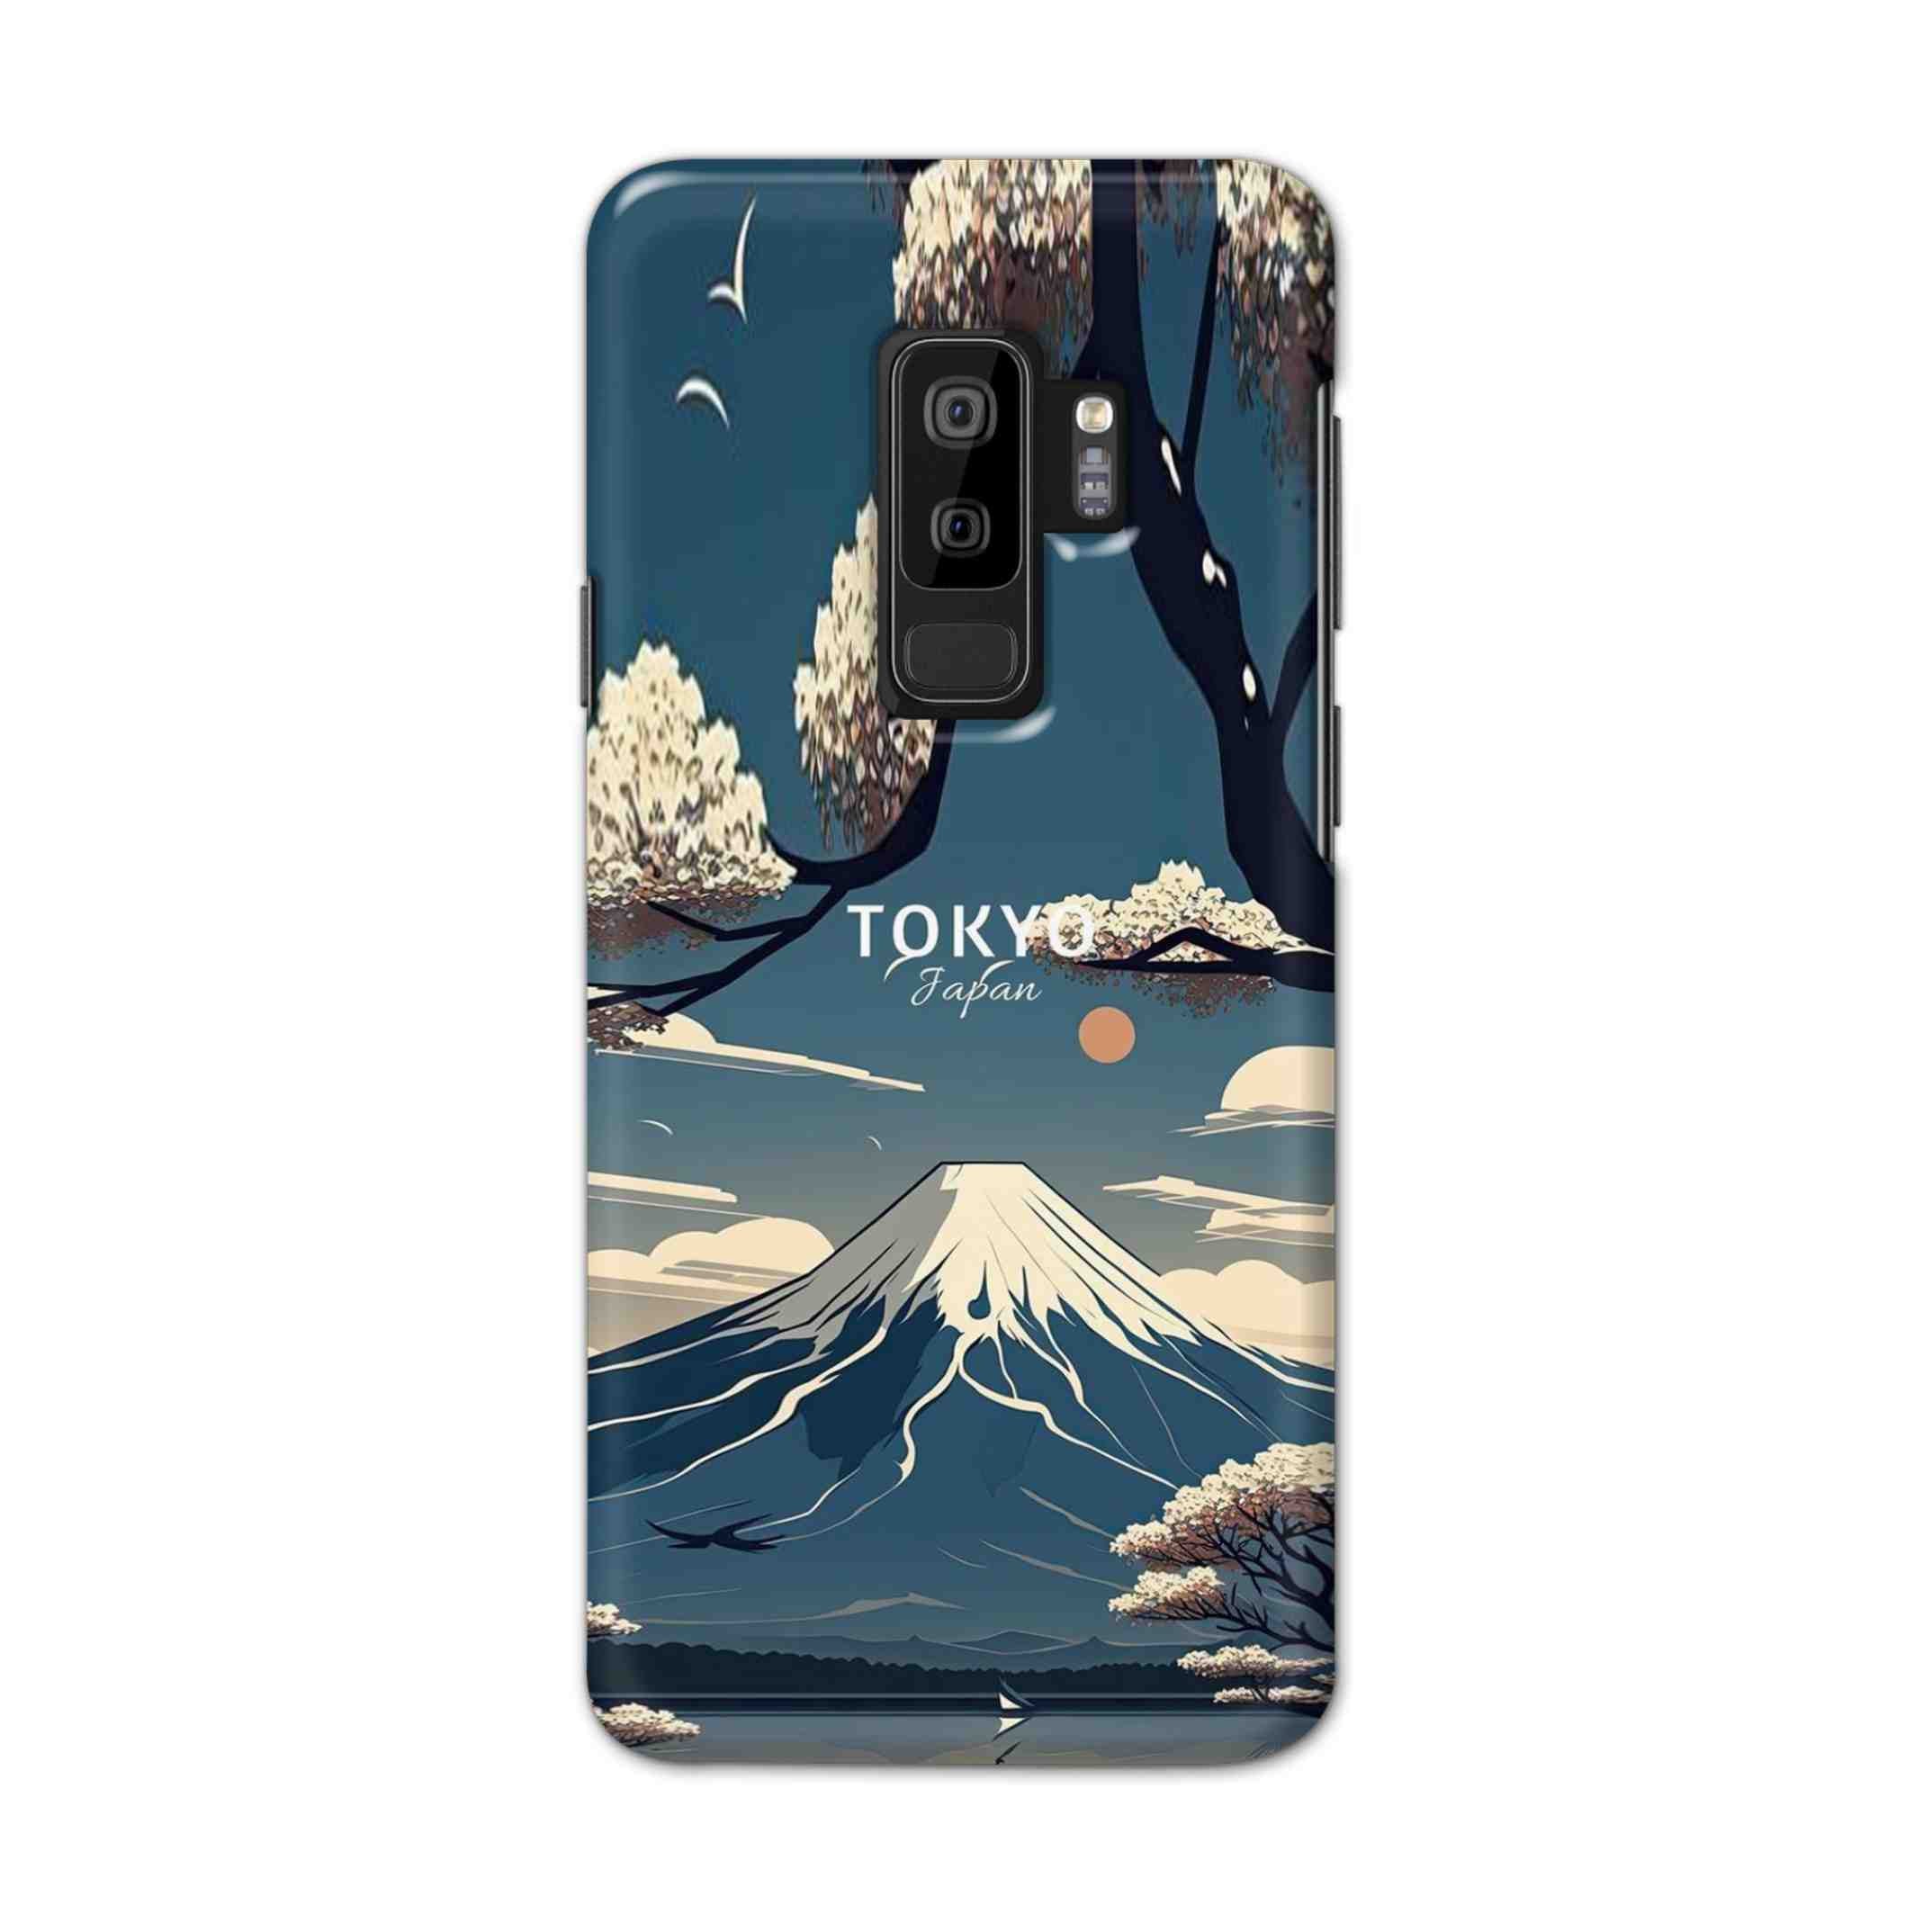 Buy Tokyo Hard Back Mobile Phone Case Cover For Samsung S9 plus Online